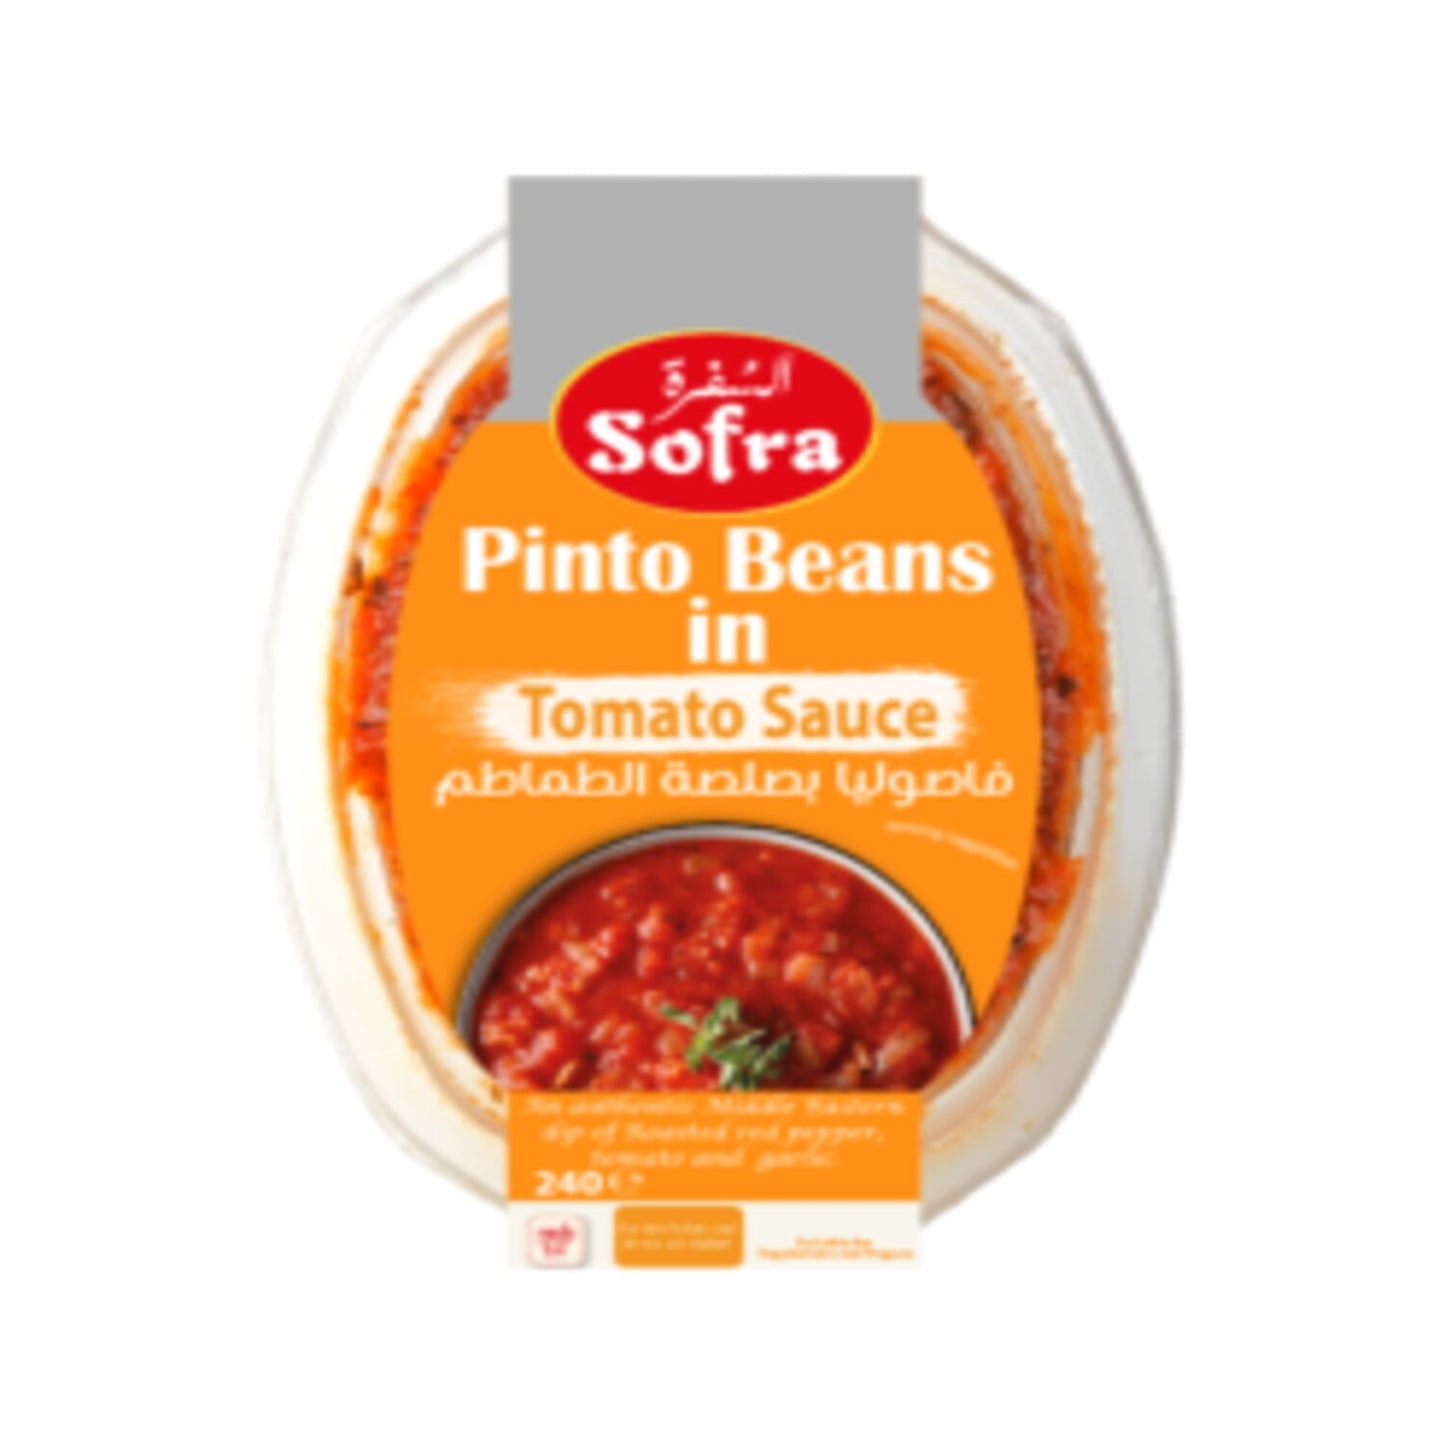 Sofra Pinto Beans in Tomato Sauce 240g